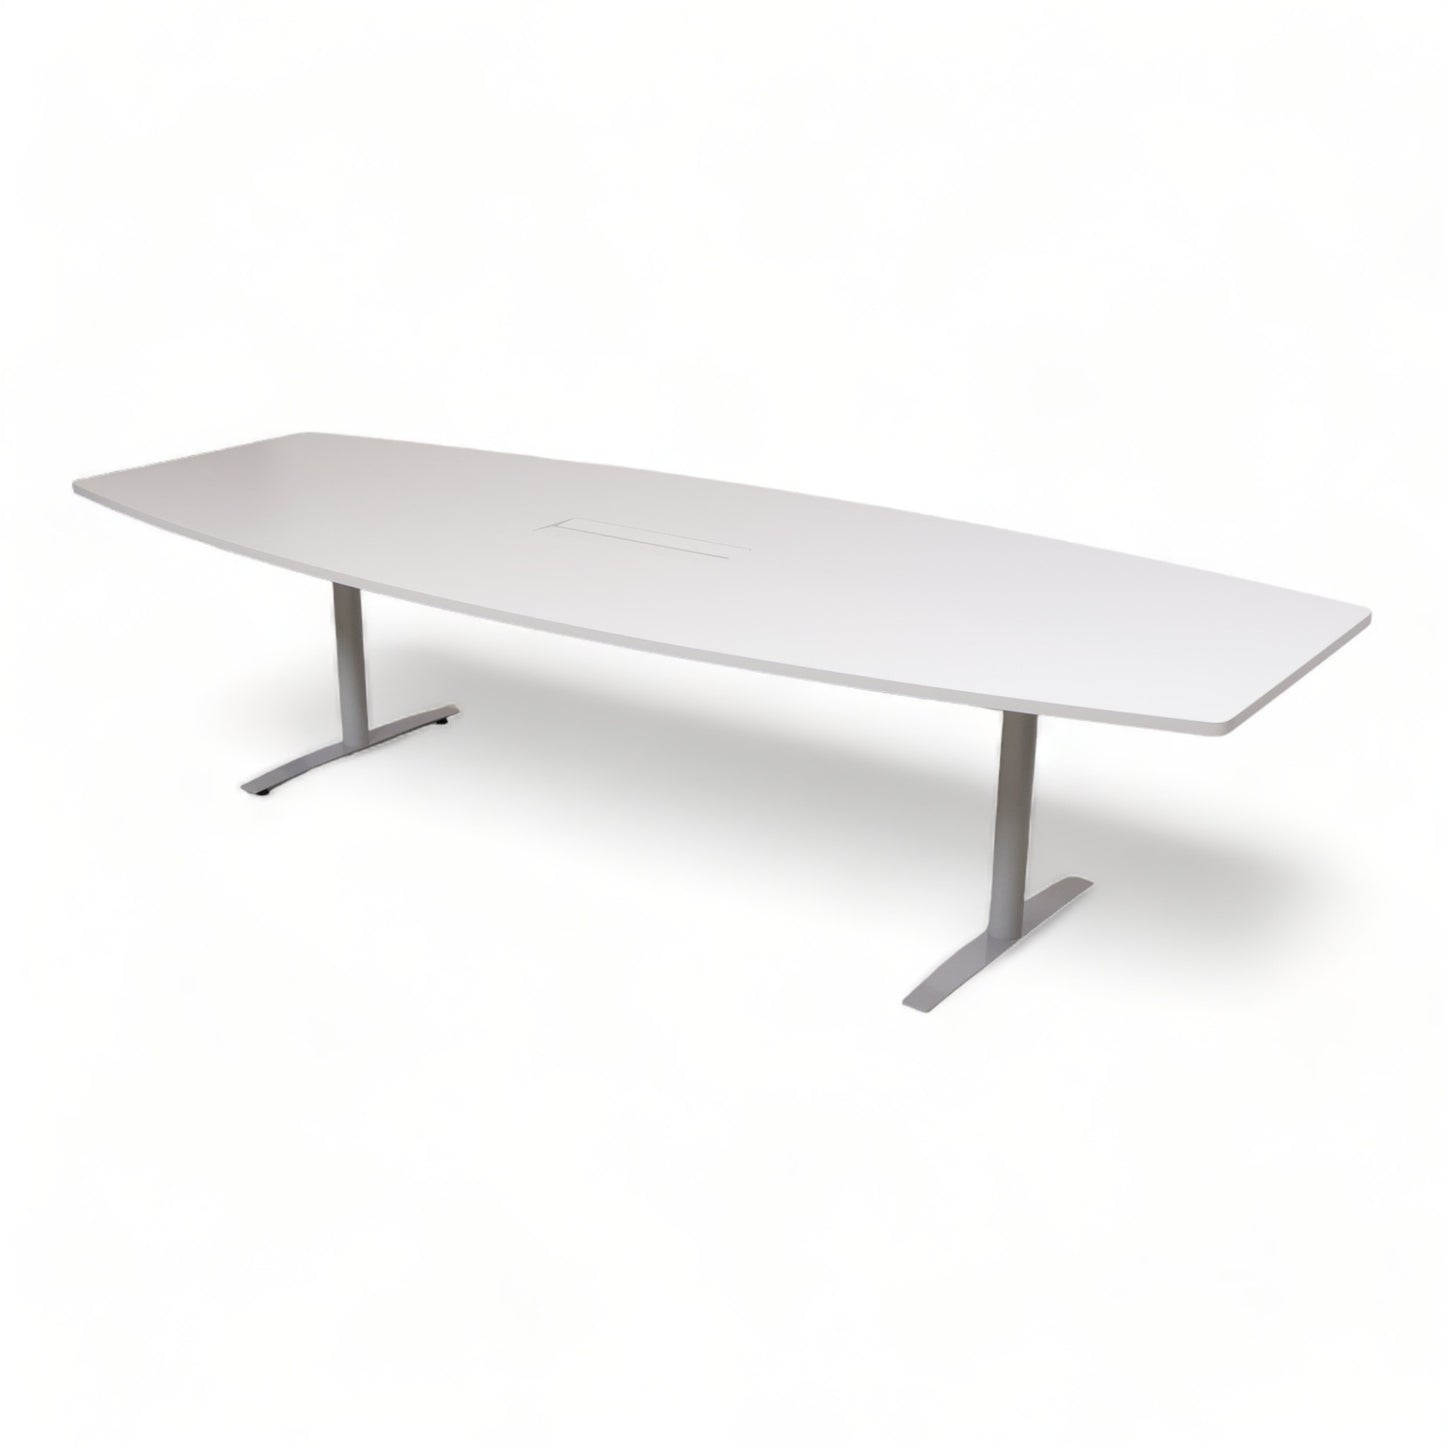 Kvalitetssikret | 300x120 cm, grått møtebord